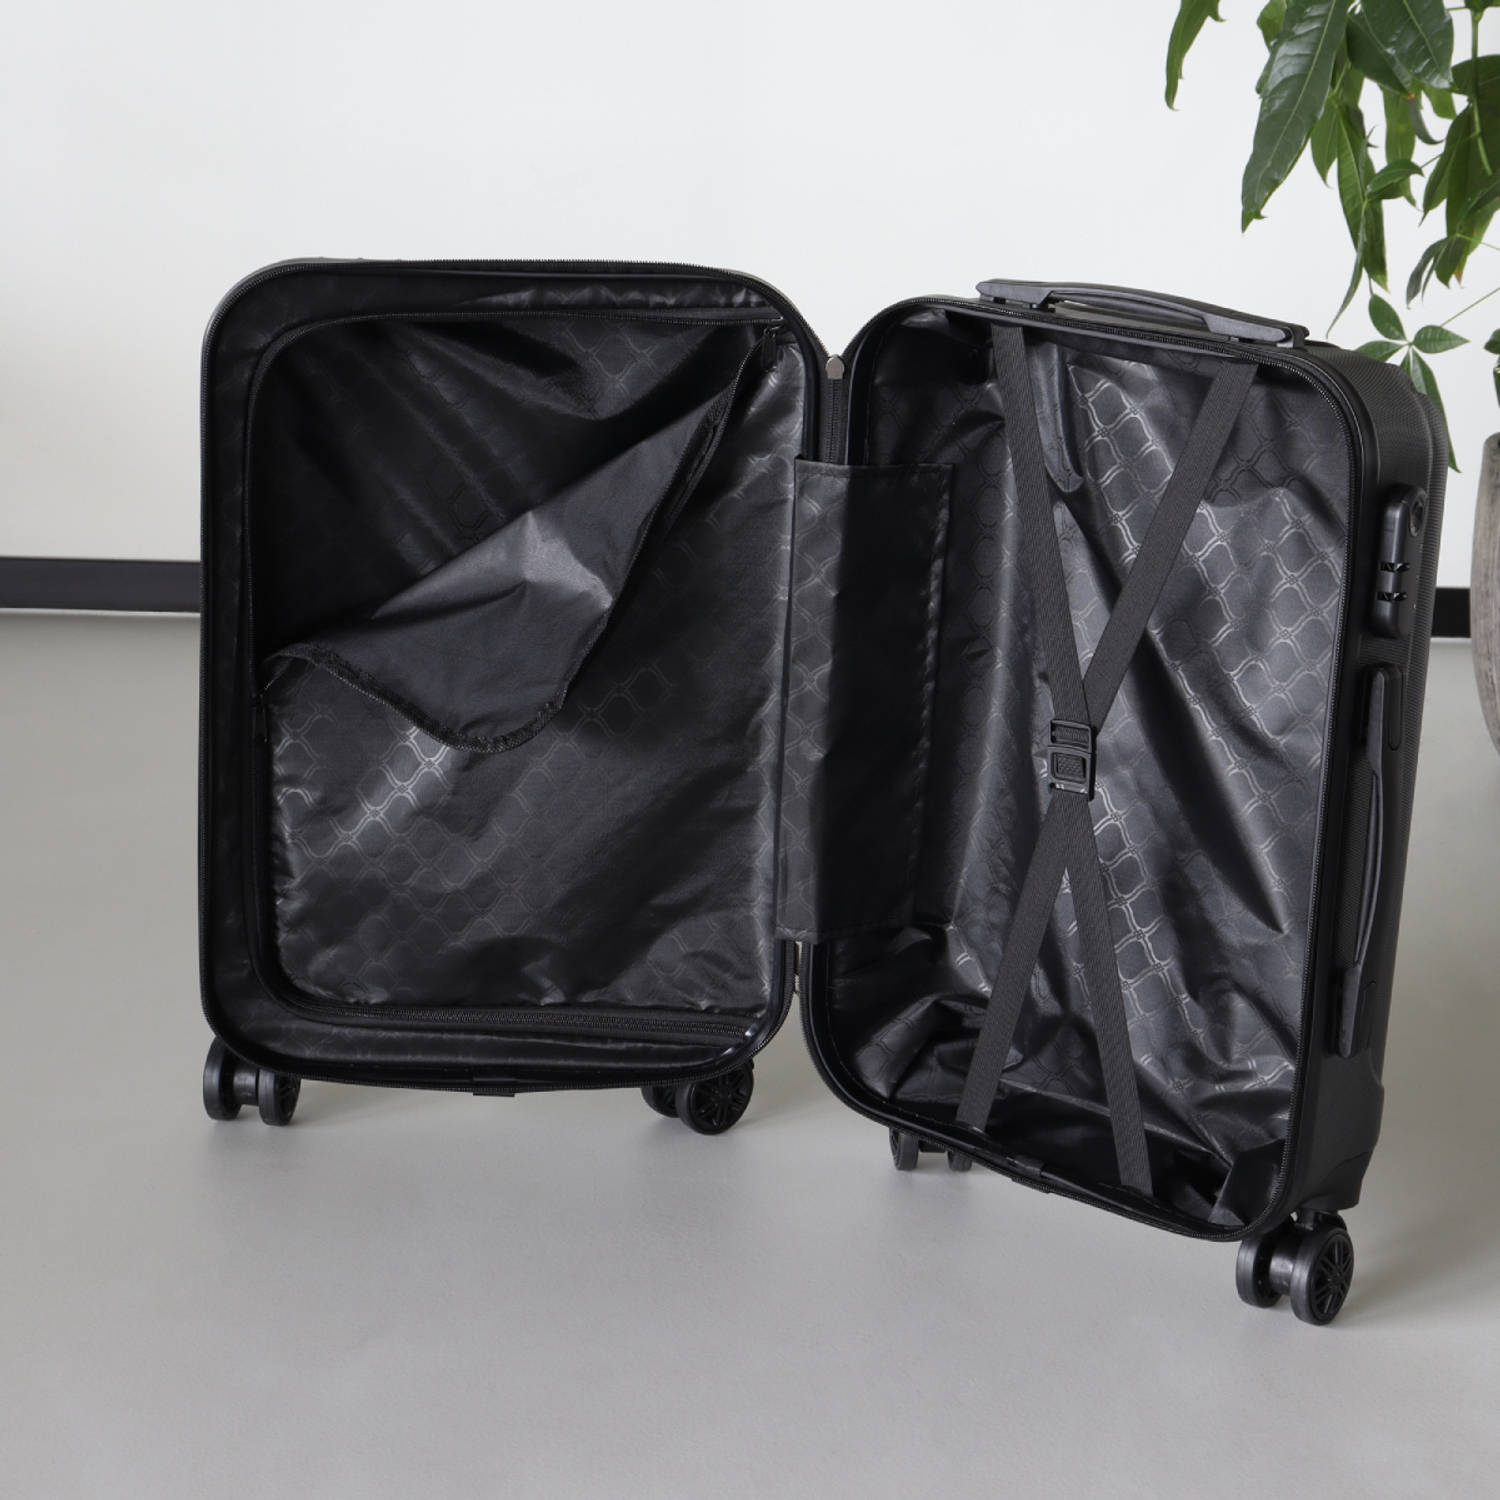 Handbagage koffer 55cm zwart 4 wielen trolley met pin